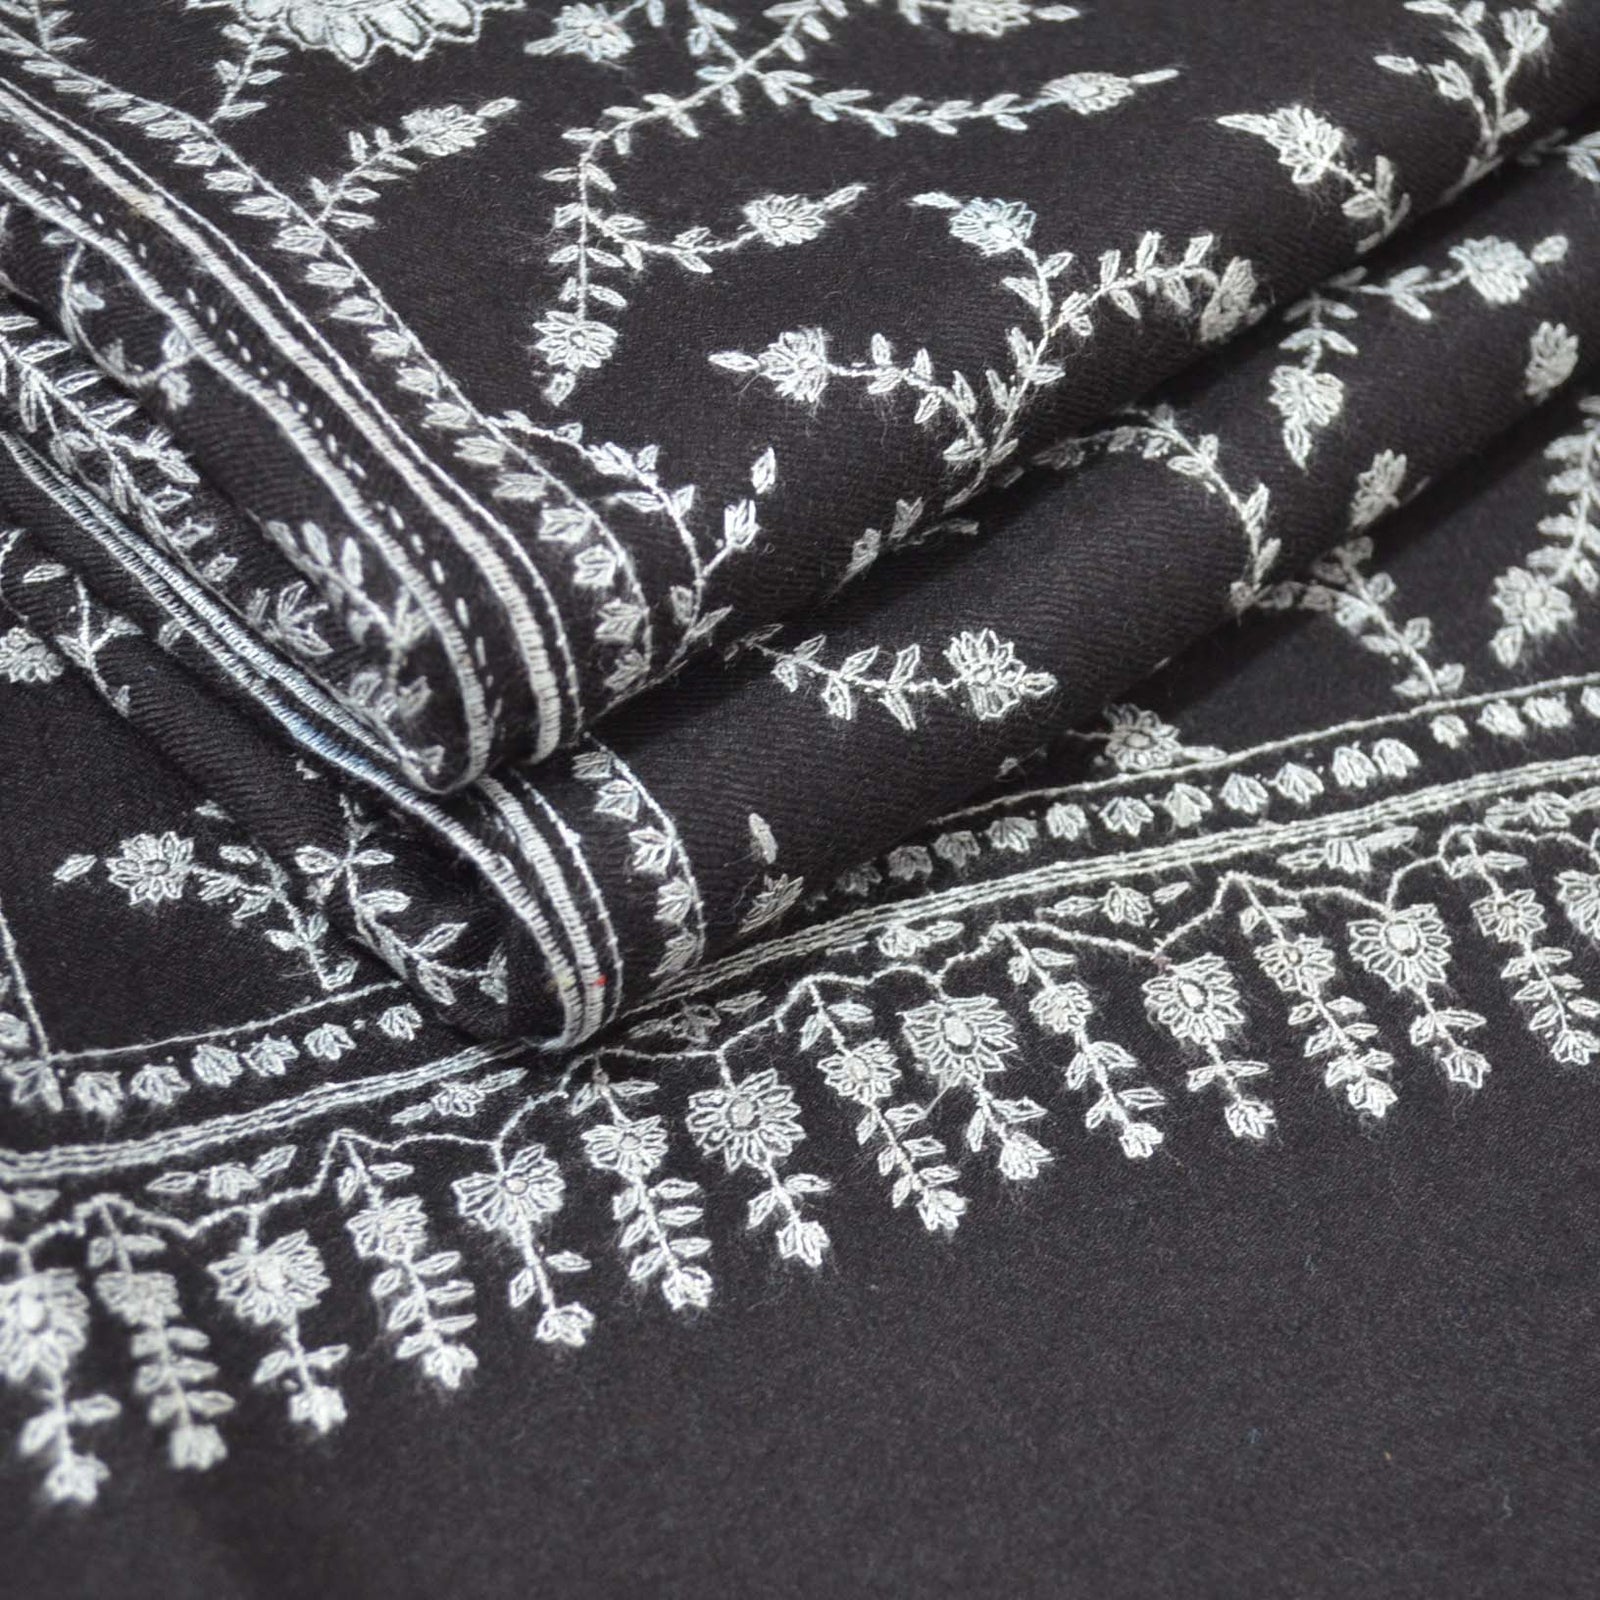 Pashmina embroidery black jali shawl